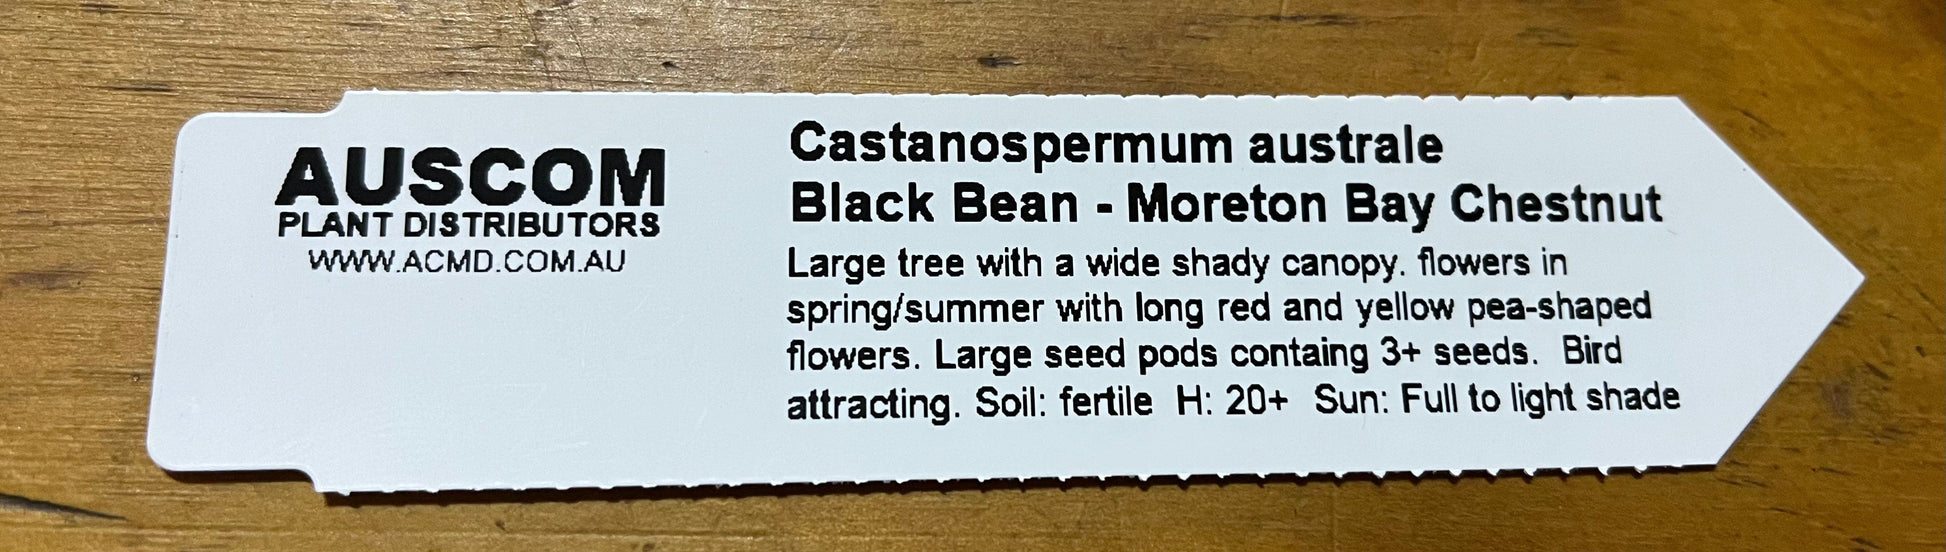 Moreton Bay Chestnut Castanospermum Australe Black Bean Tree - Auscom Plant Distributors